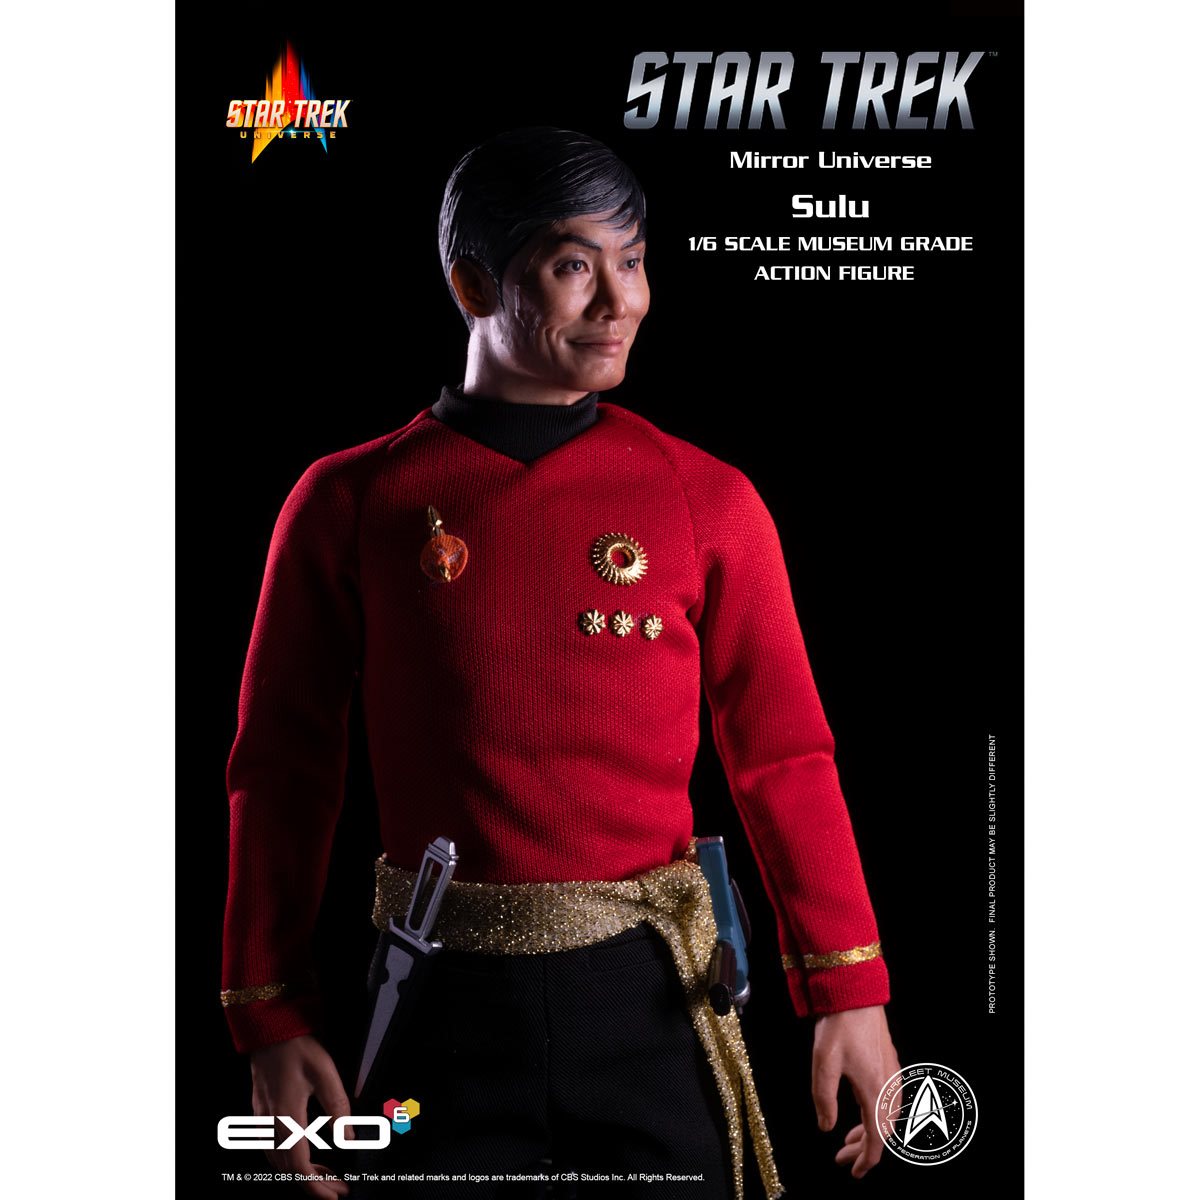 Star Trek Lt Commander Spock Mirror Universe cosplay I.D Badge 